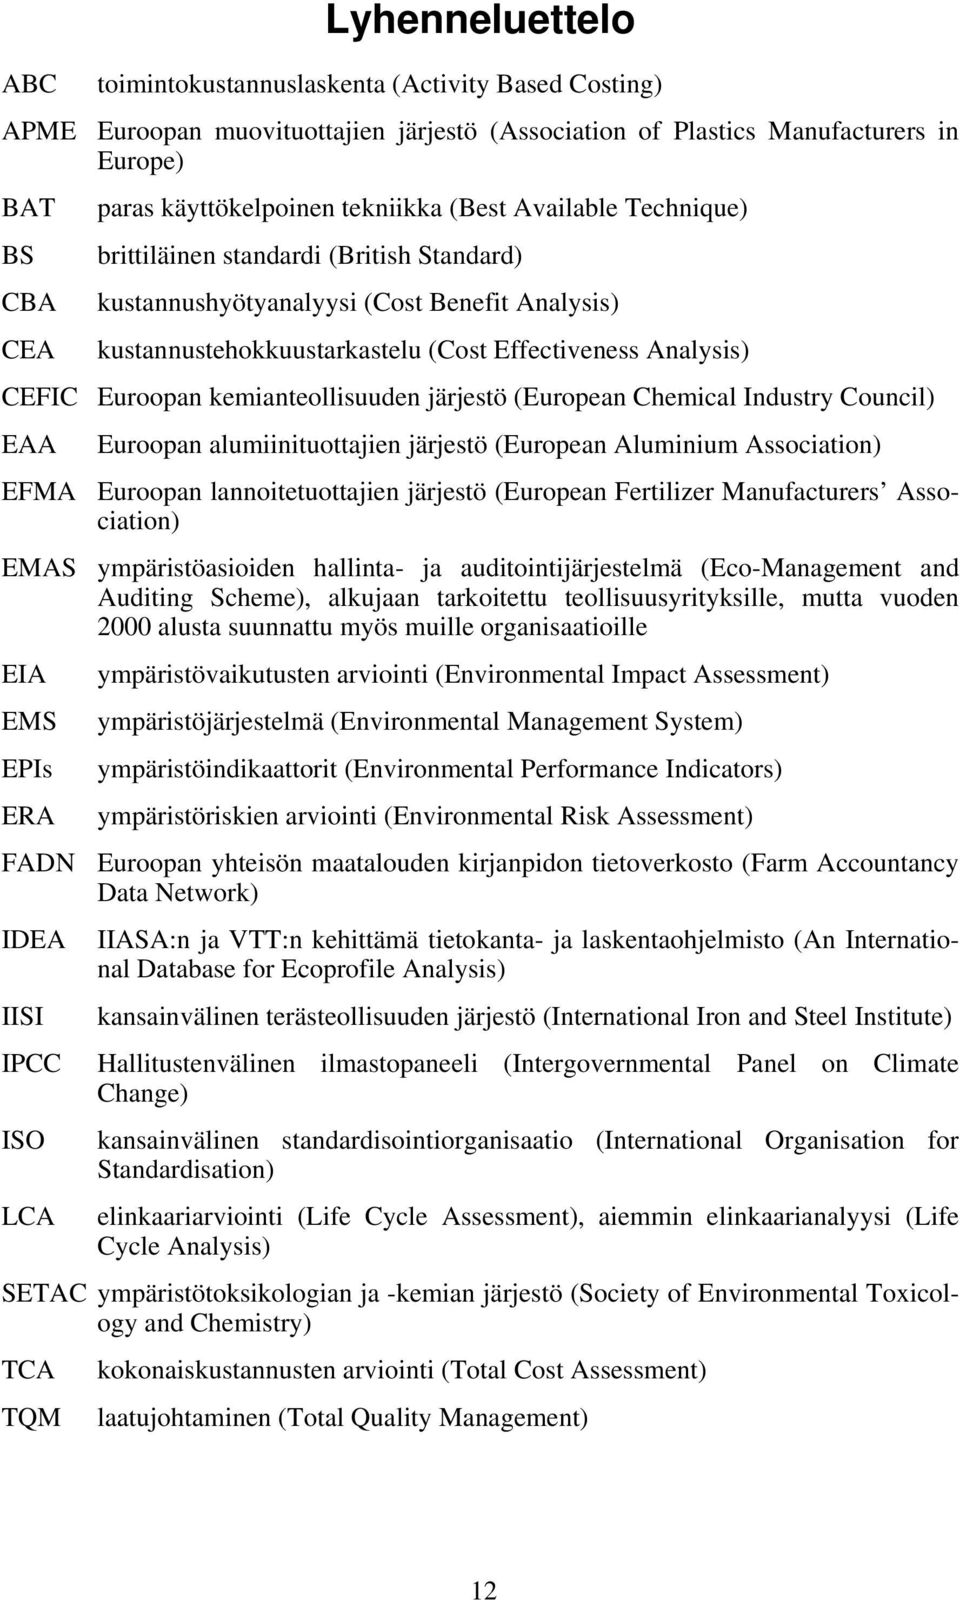 kemianteollisuuden järjestö (European Chemical Industry Council) EAA EFMA EMAS EIA EMS EPIs ERA FADN IDEA IISI IPCC ISO LCA Euroopan alumiinituottajien järjestö (European Aluminium Association)